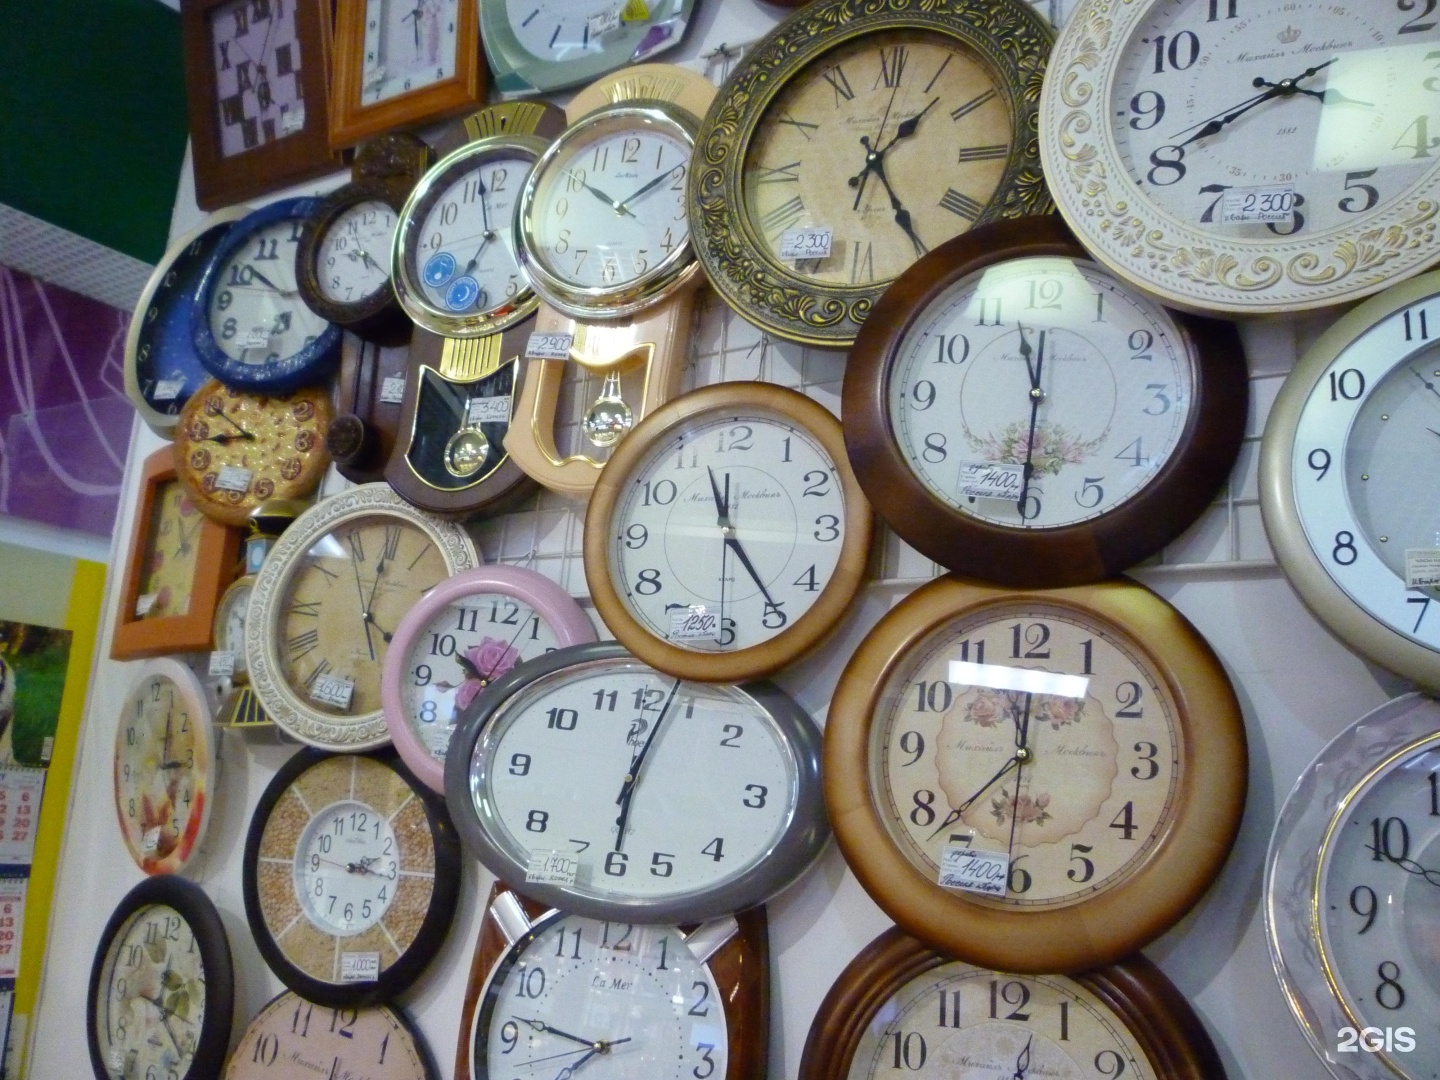 Магазин часы оренбург. Часы Оренбург. Тик так магазин часов Златоуст. Магазин часов Оренбург. Город Оренбург часы.